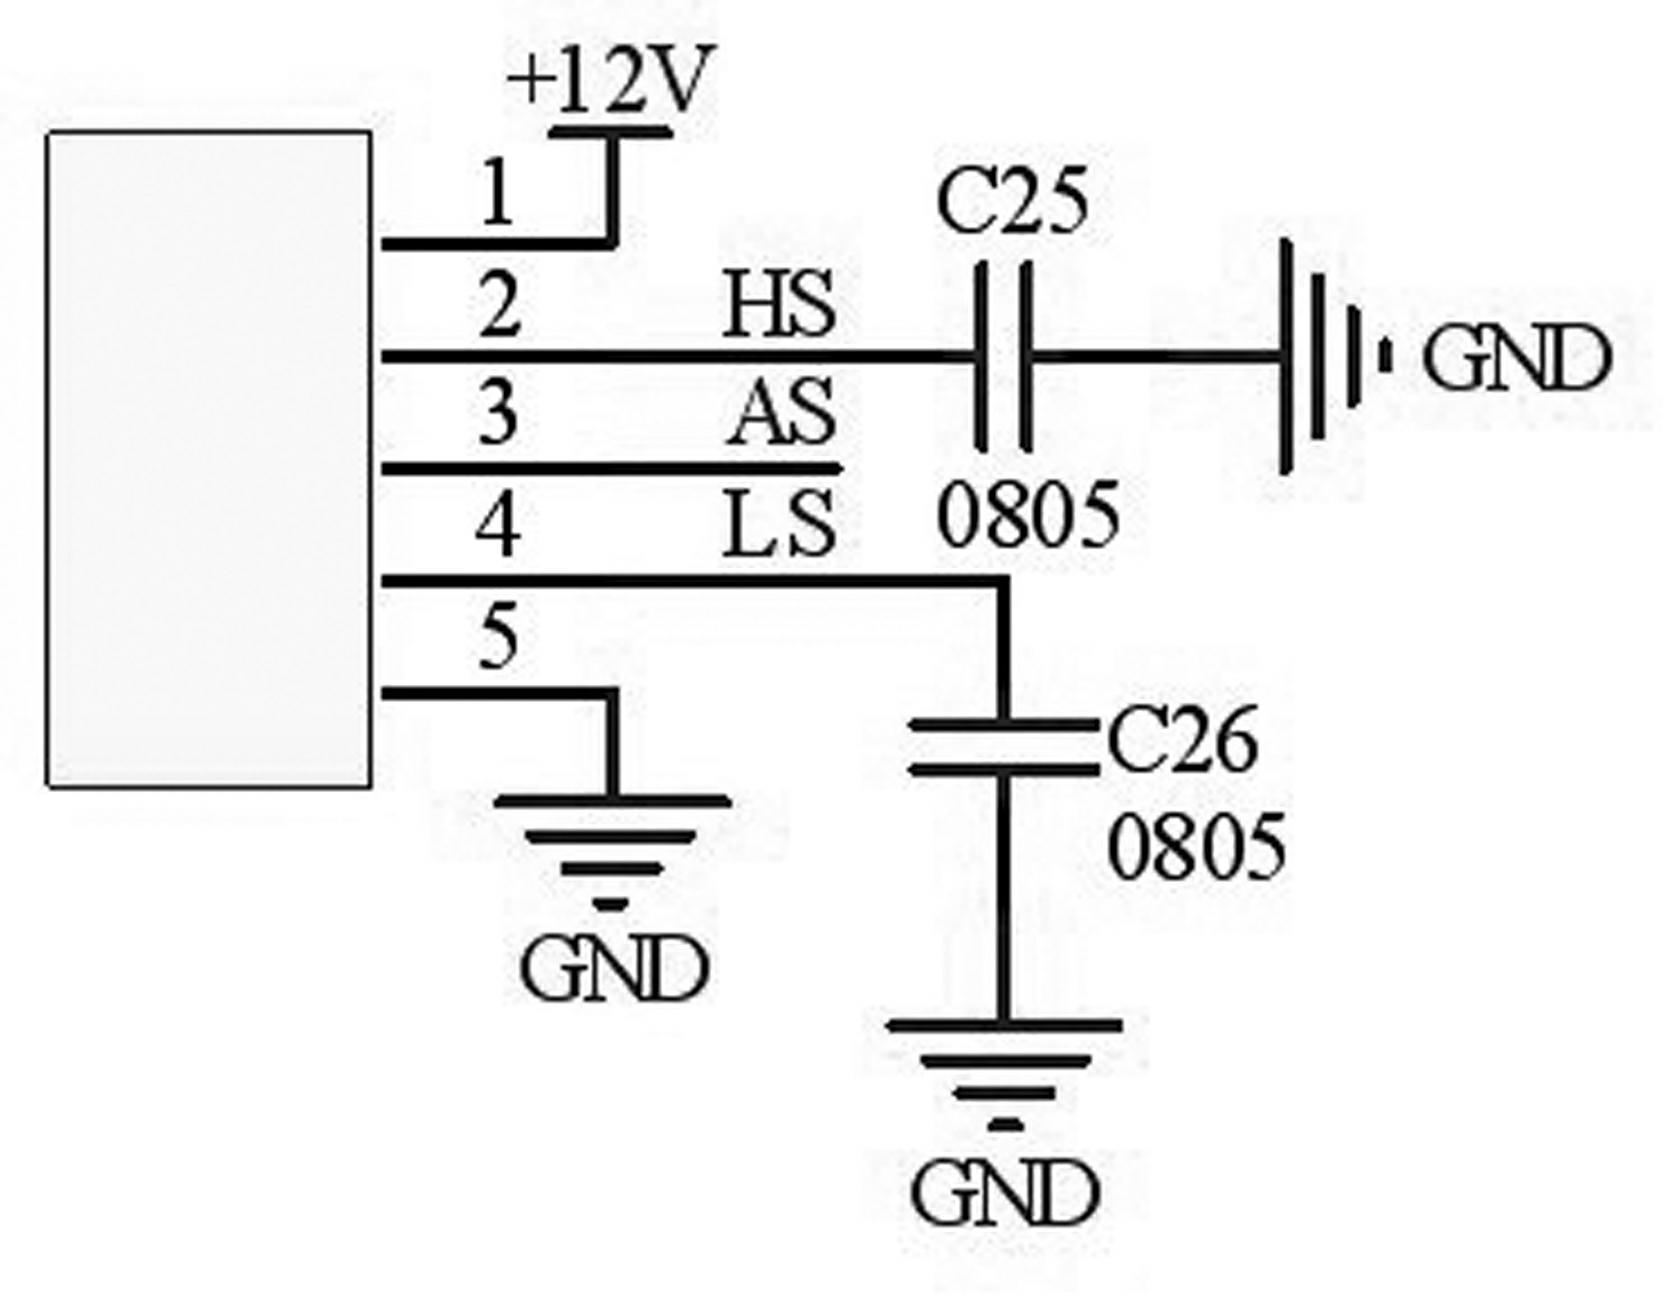 Wiper motor speed regulation system with pulse-width modulation and voltage regulation